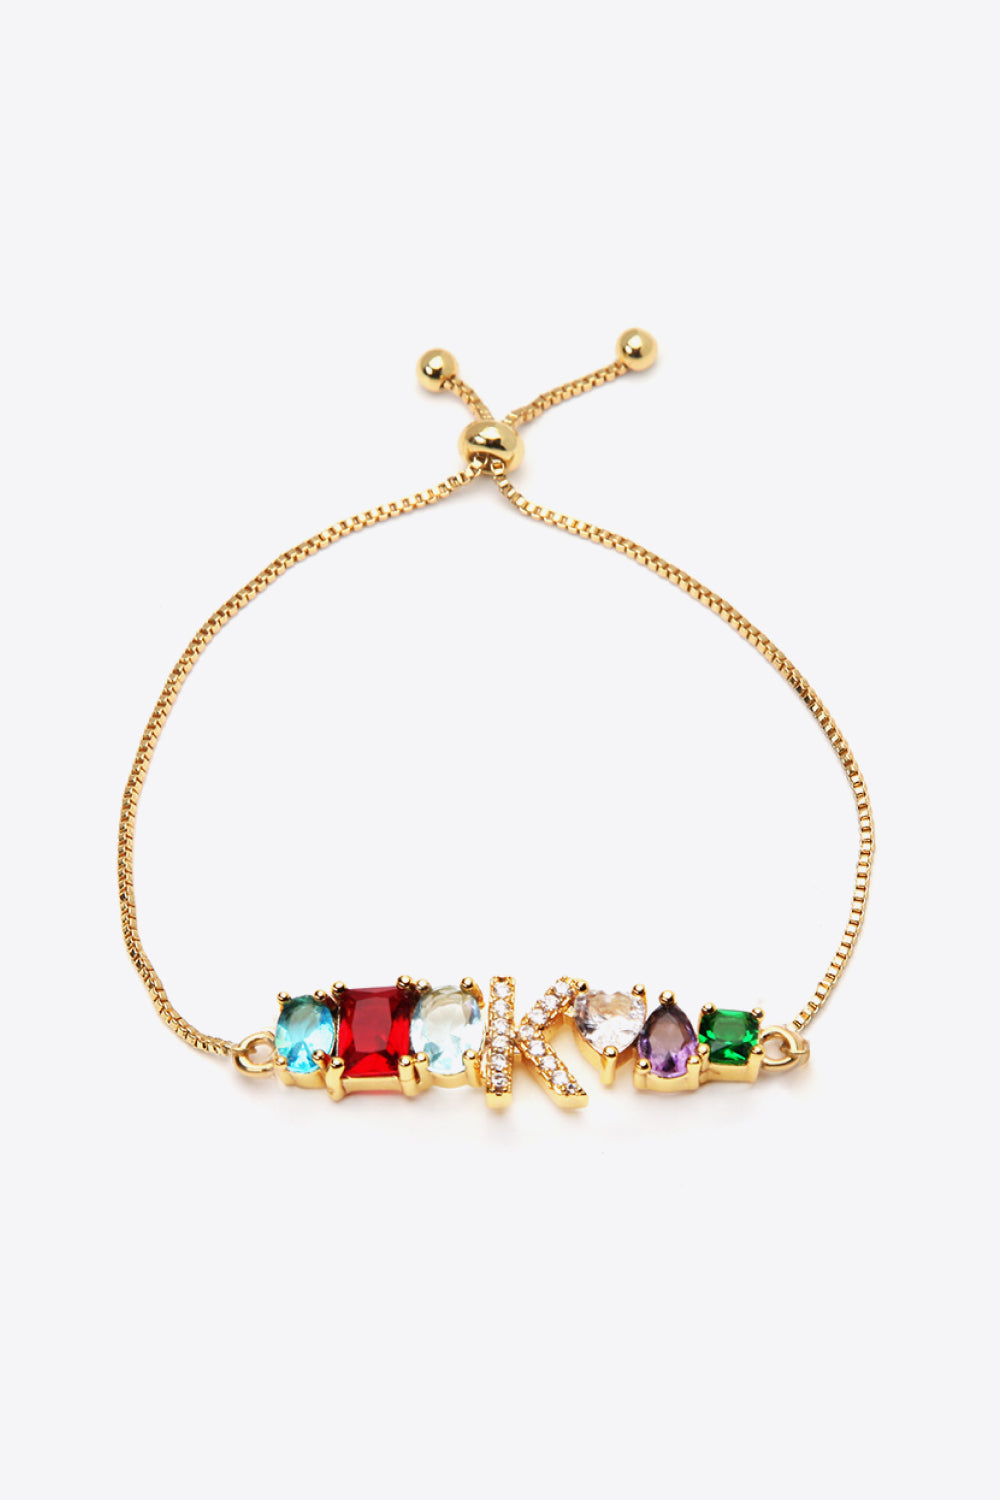 K to T Zircon Bracelet - K / One Size - Women’s Jewelry - Bracelets - 1 - 2024